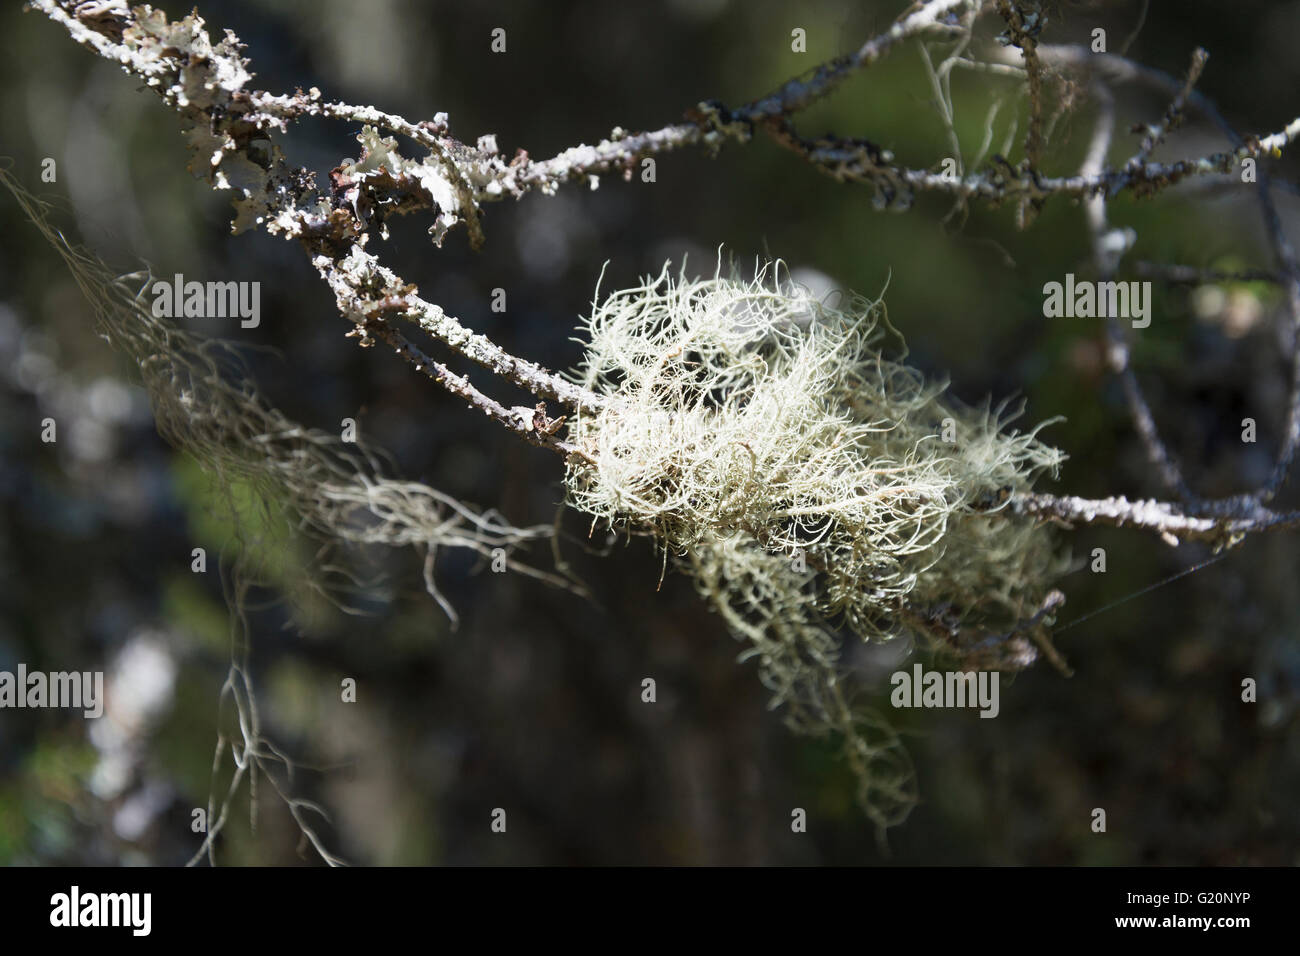 Bearded moss or Bearded lichen (Usnea) on a tree twig Stock Photo